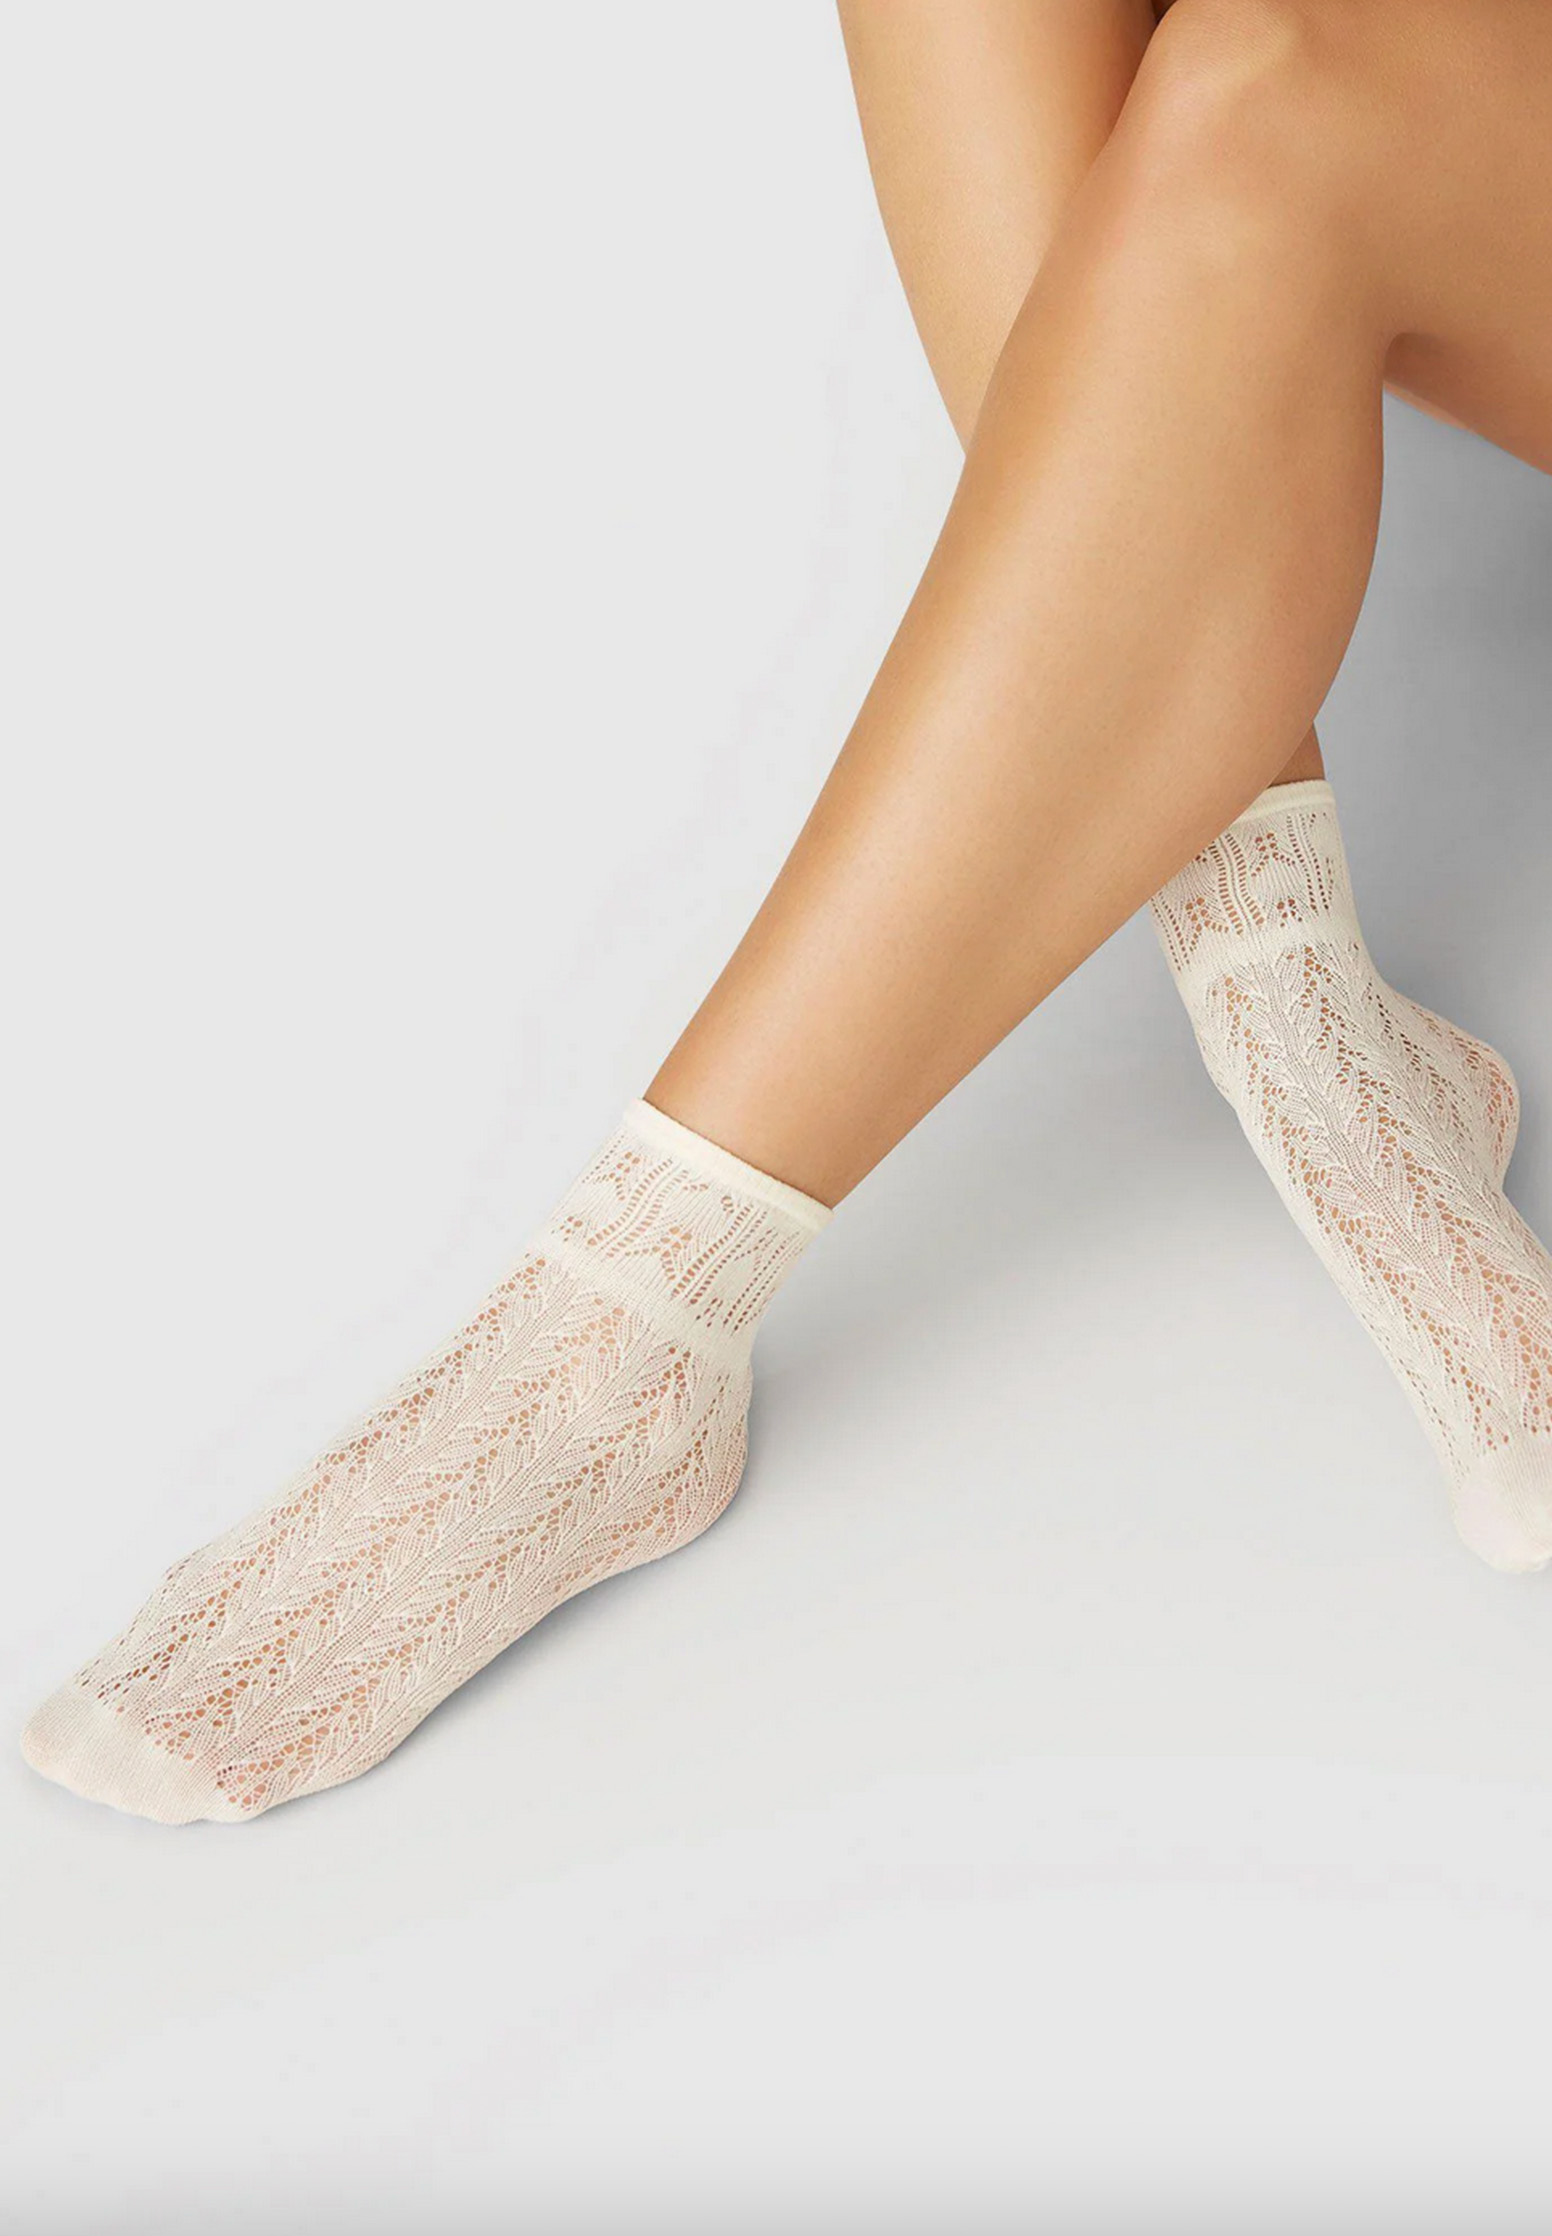 SWEDISH STOCKINGS Erica Crochet Socks ivory